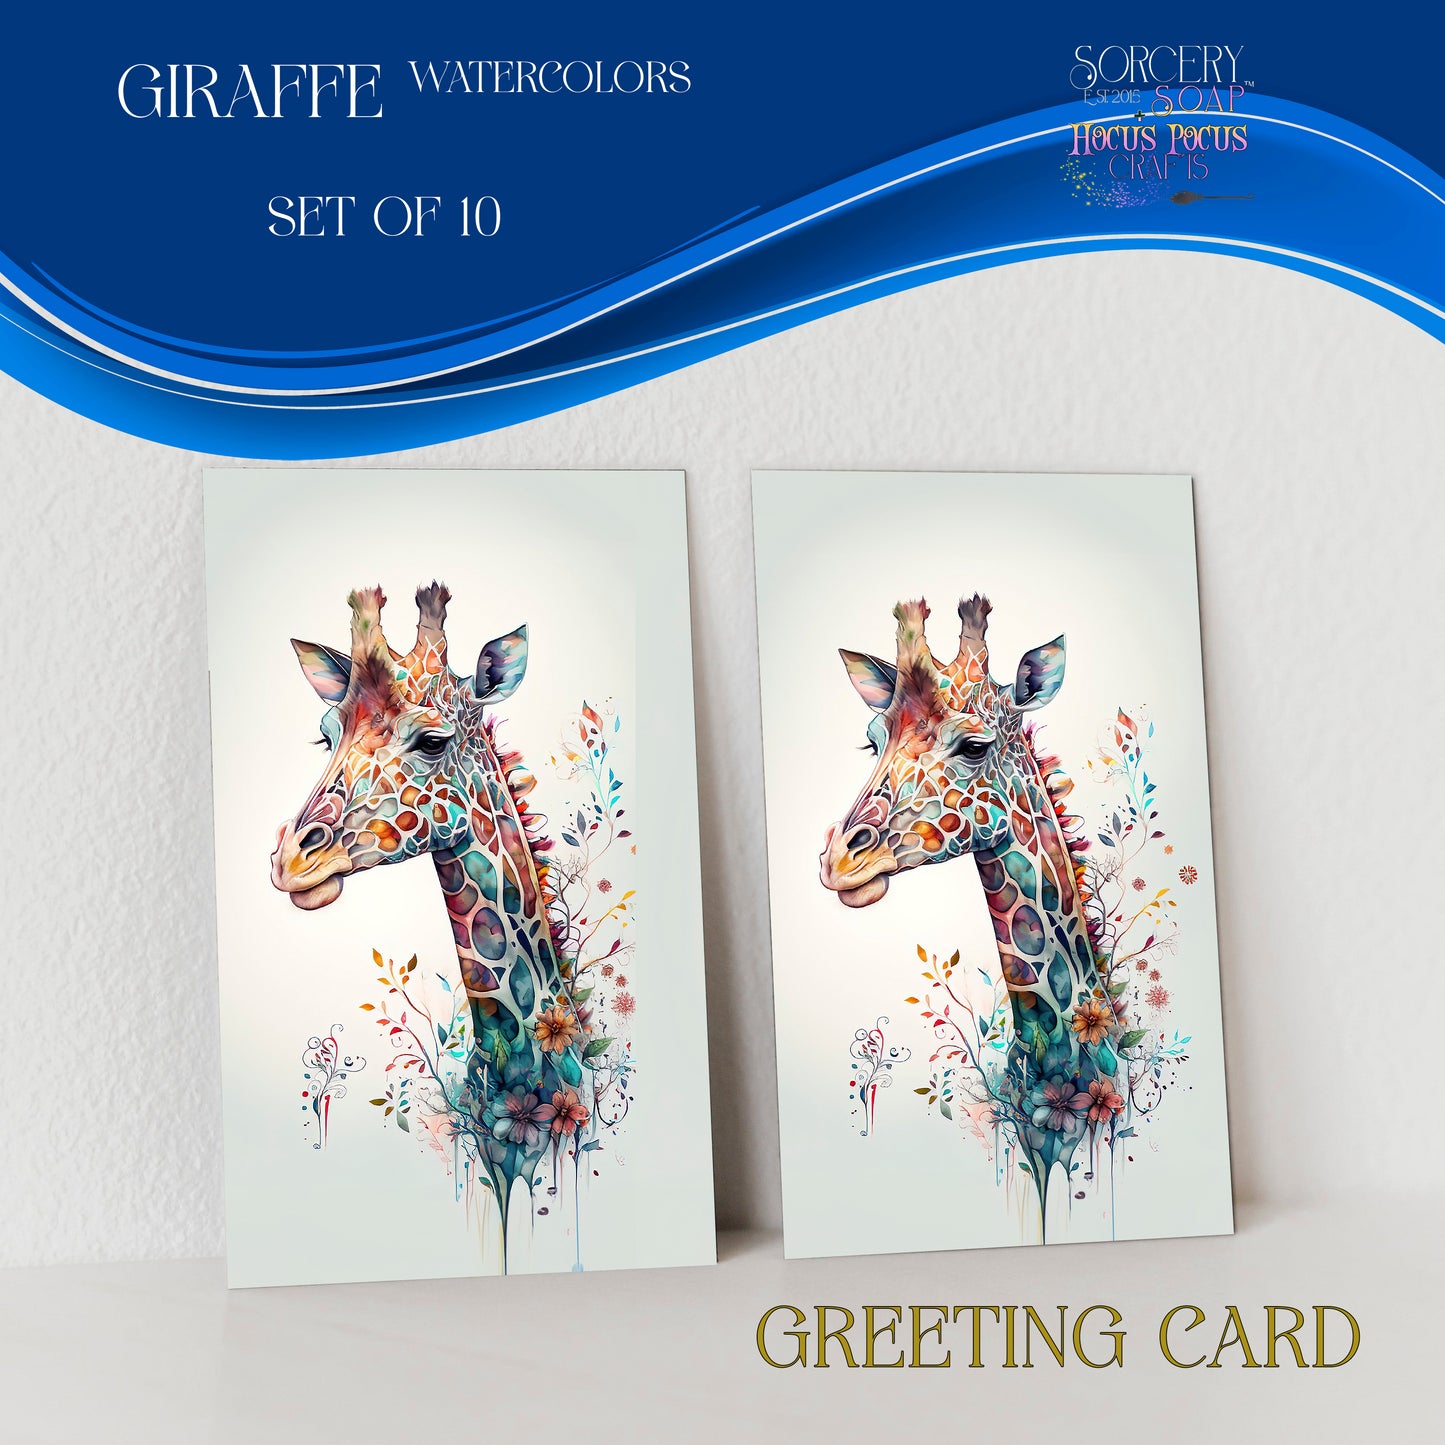 Giraffe Watercolors Greeting Card